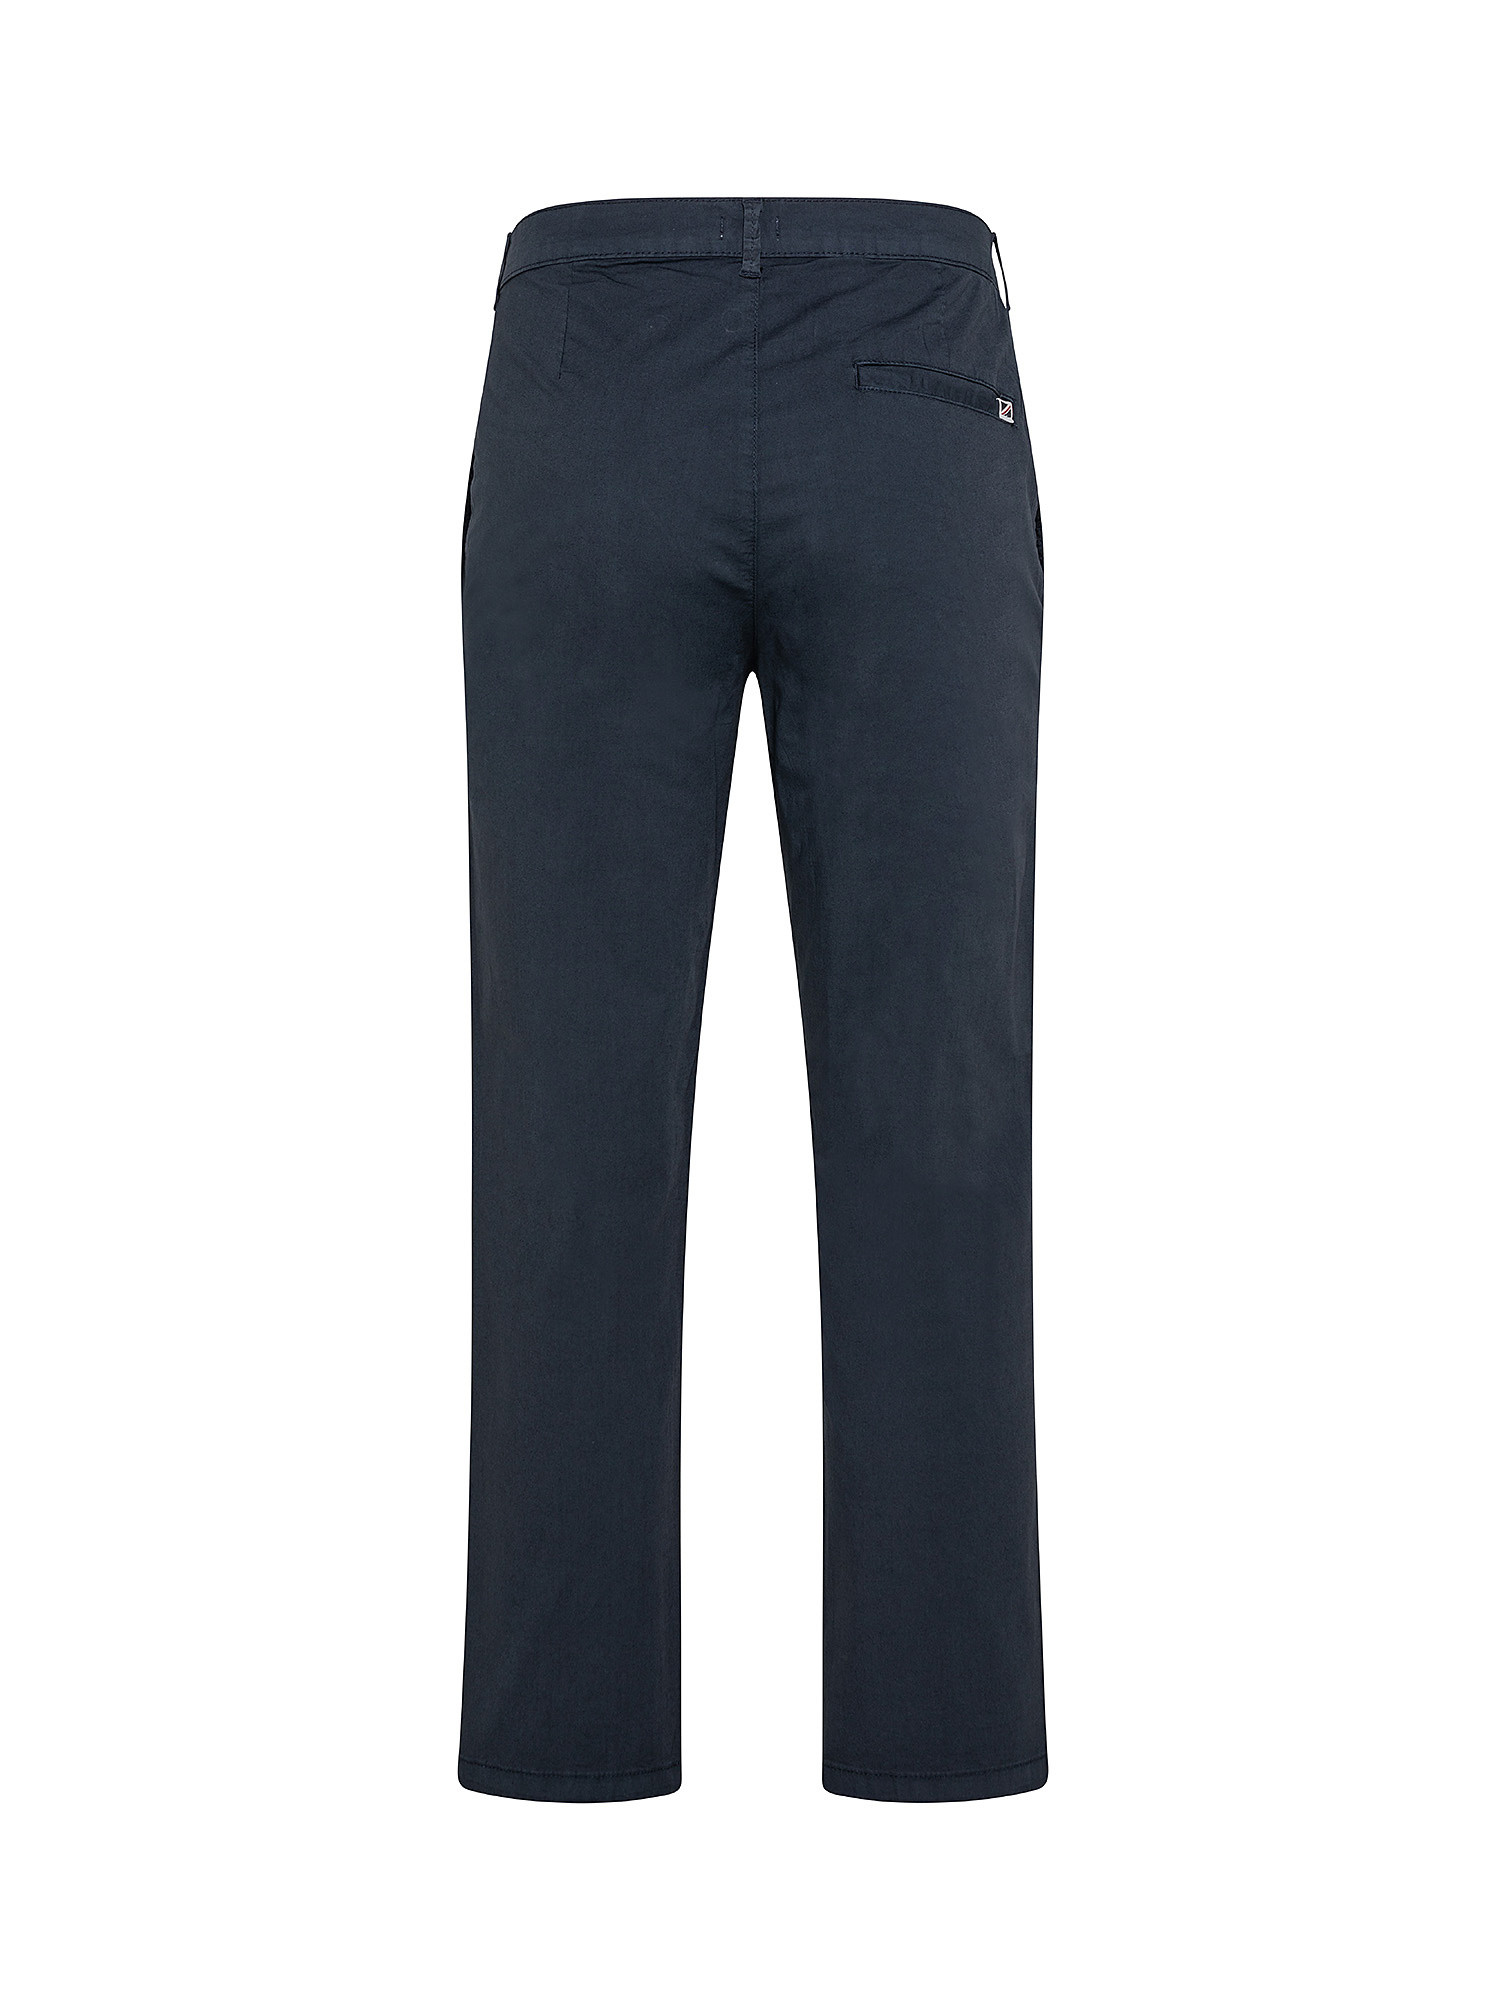 Pantaloni abito Jareth, Blu scuro, large image number 1